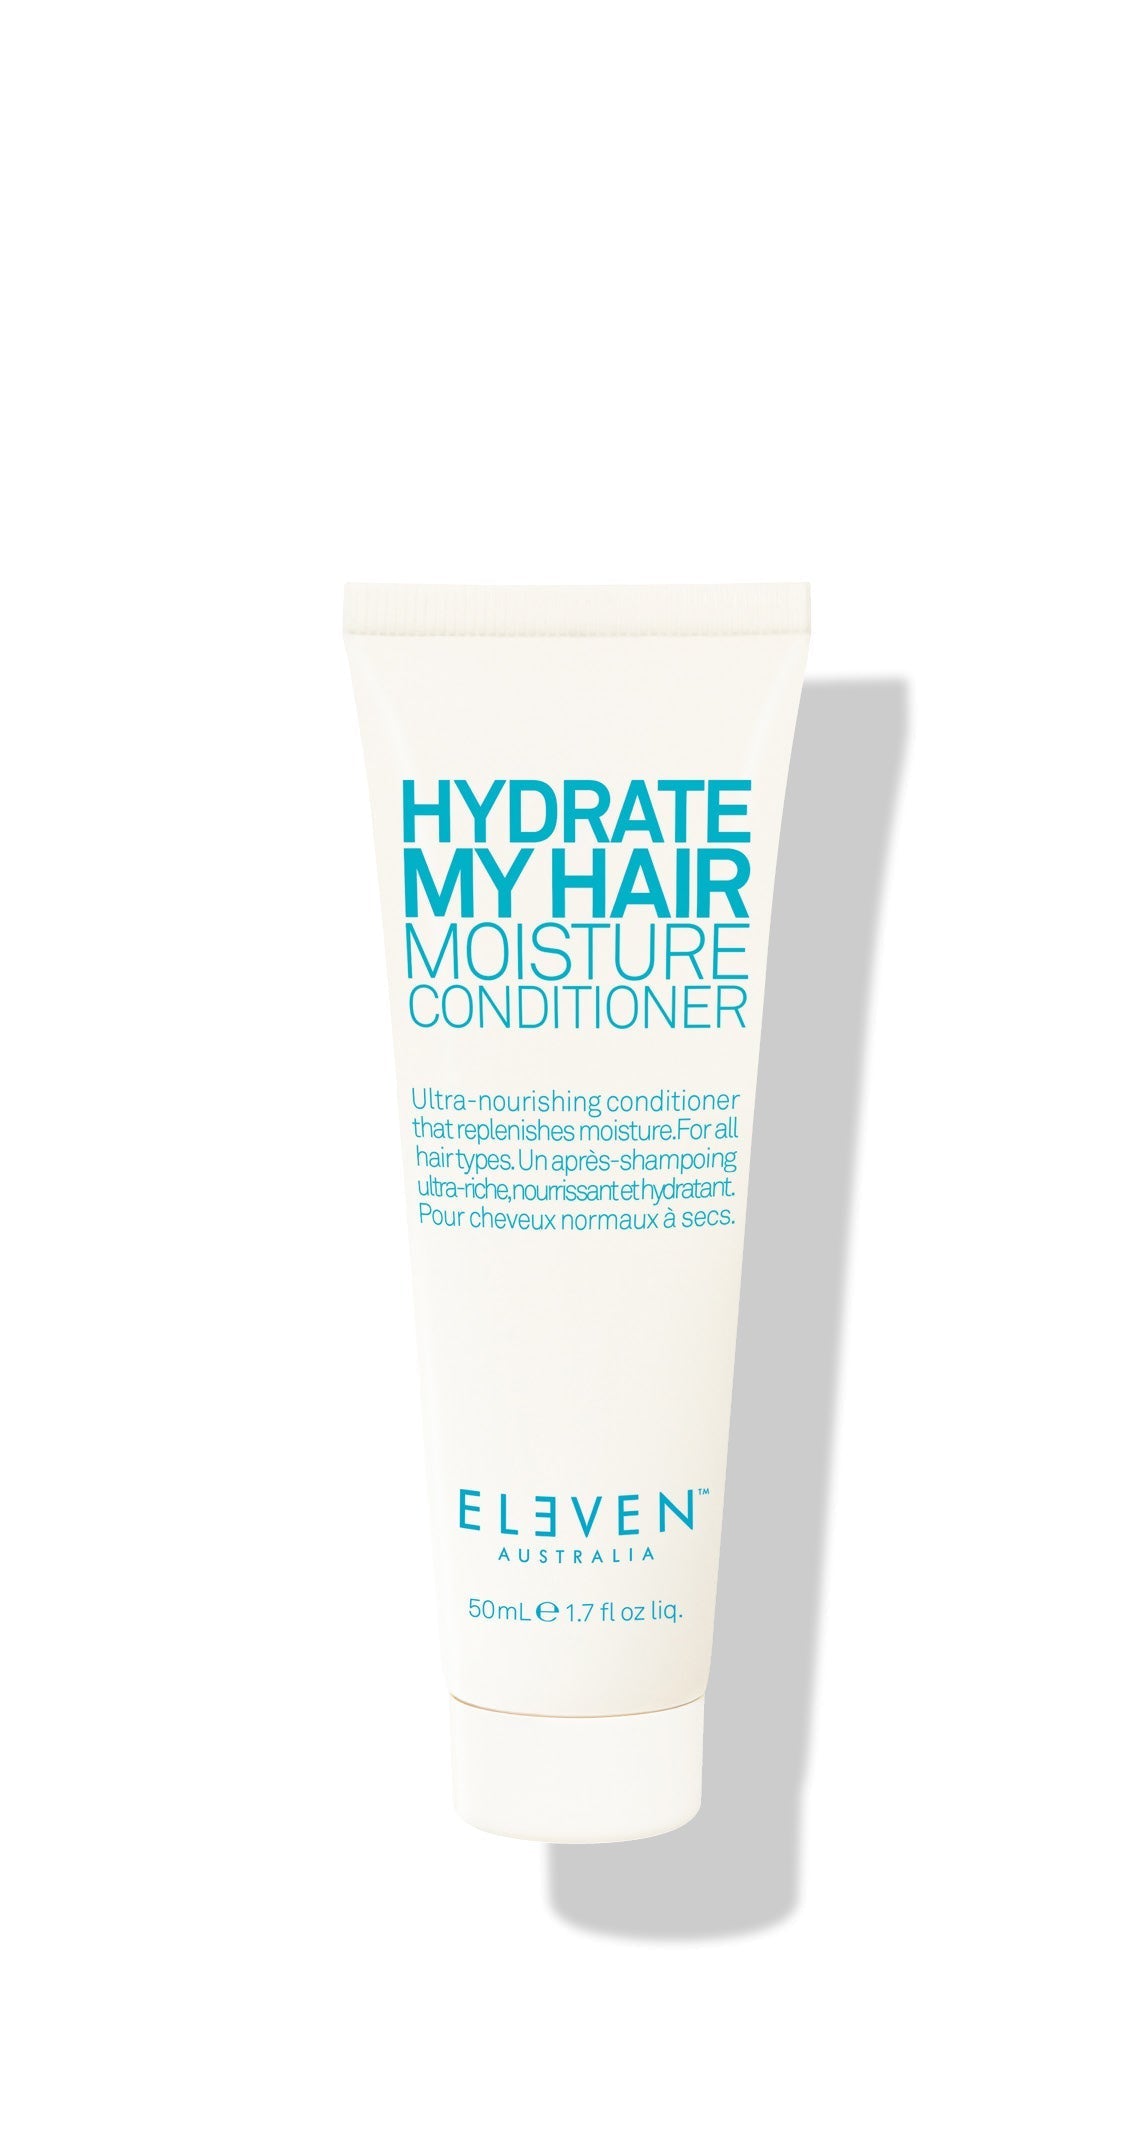 Hydrate My Hair Moisture Conditioner - 50ml - ELEVEN Australia